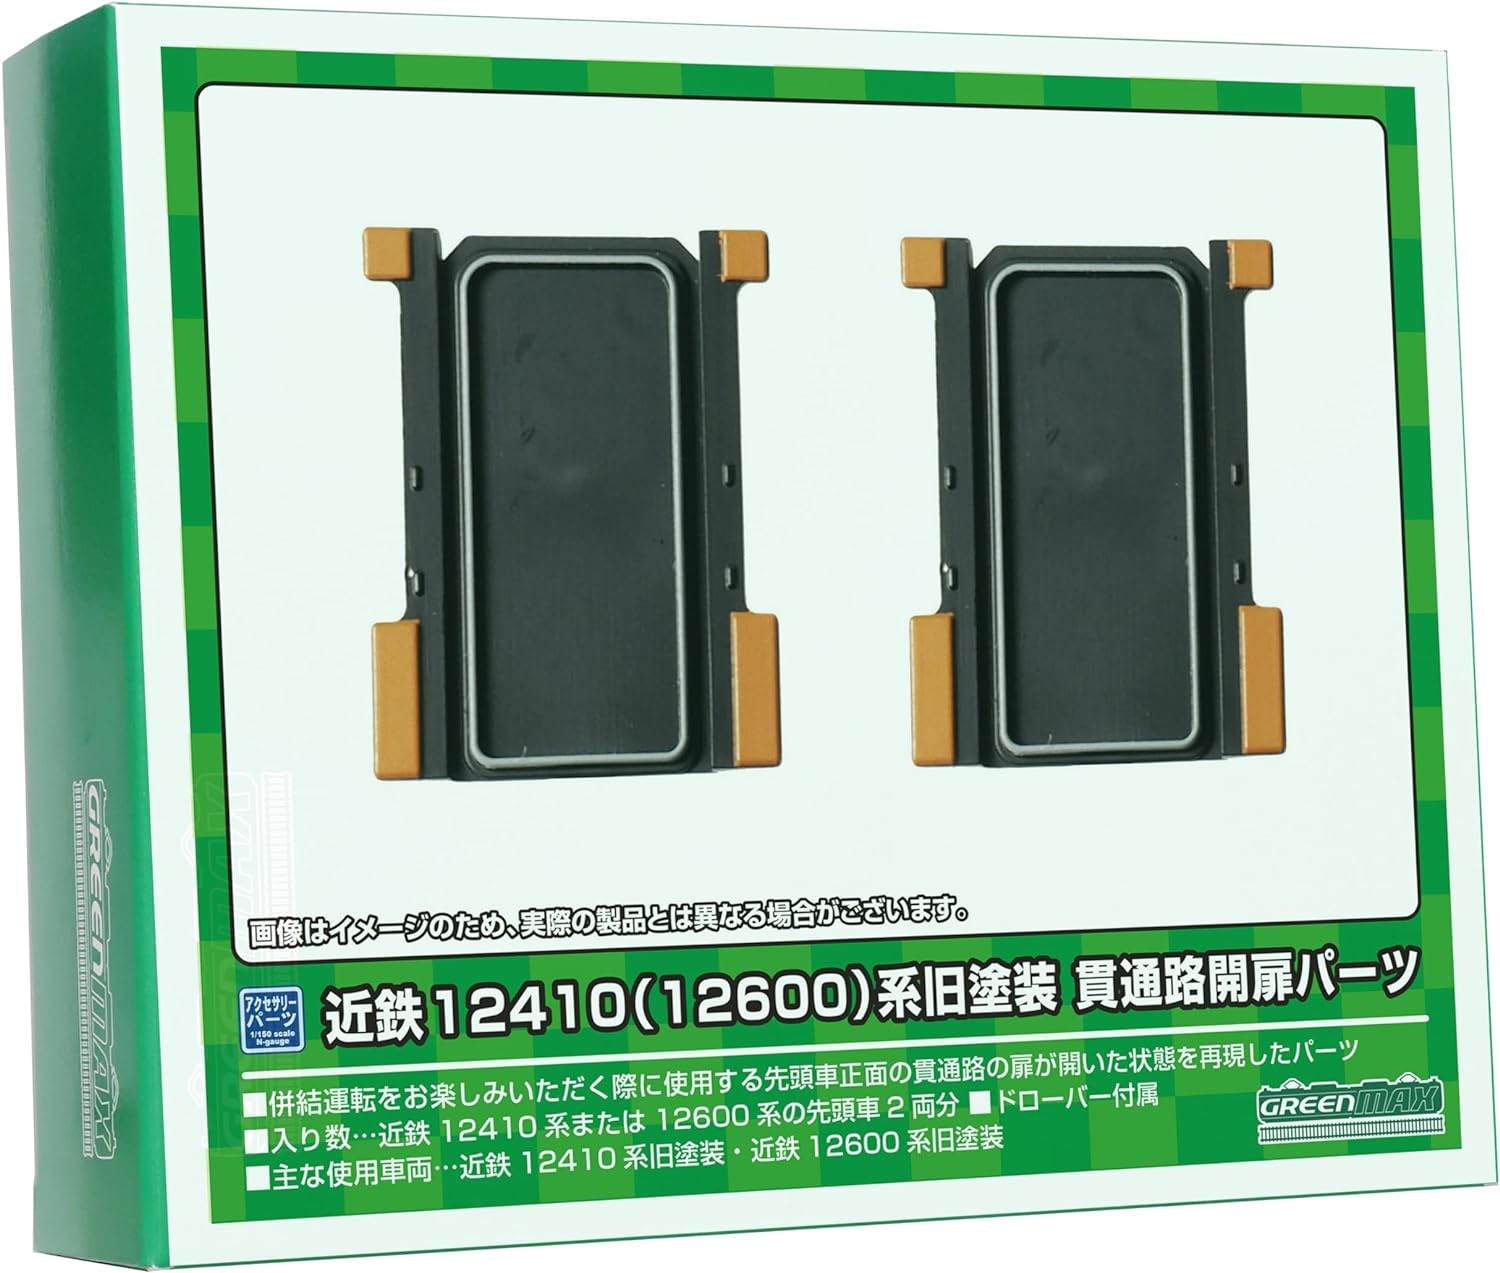 GreenMax 8599 N Gauge Kintetsu 12410 (12600) Series, Old Painted Passage Opening Parts - BanzaiHobby